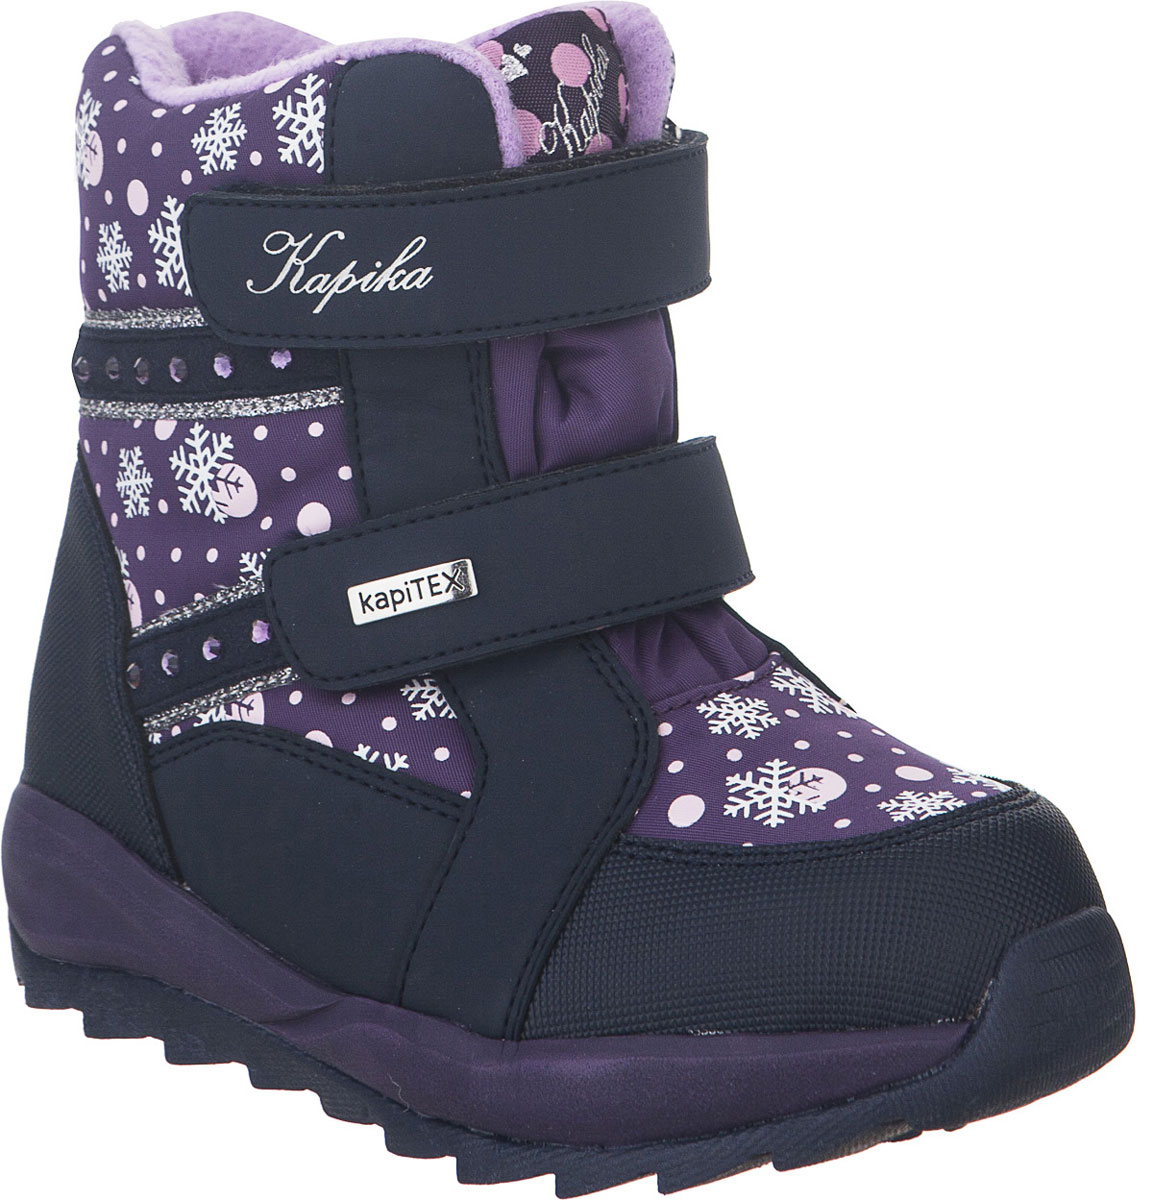 Ботинки для девочки Kapika, цвет: фиолетовый, темно-синий. 42240-2. Размер 28